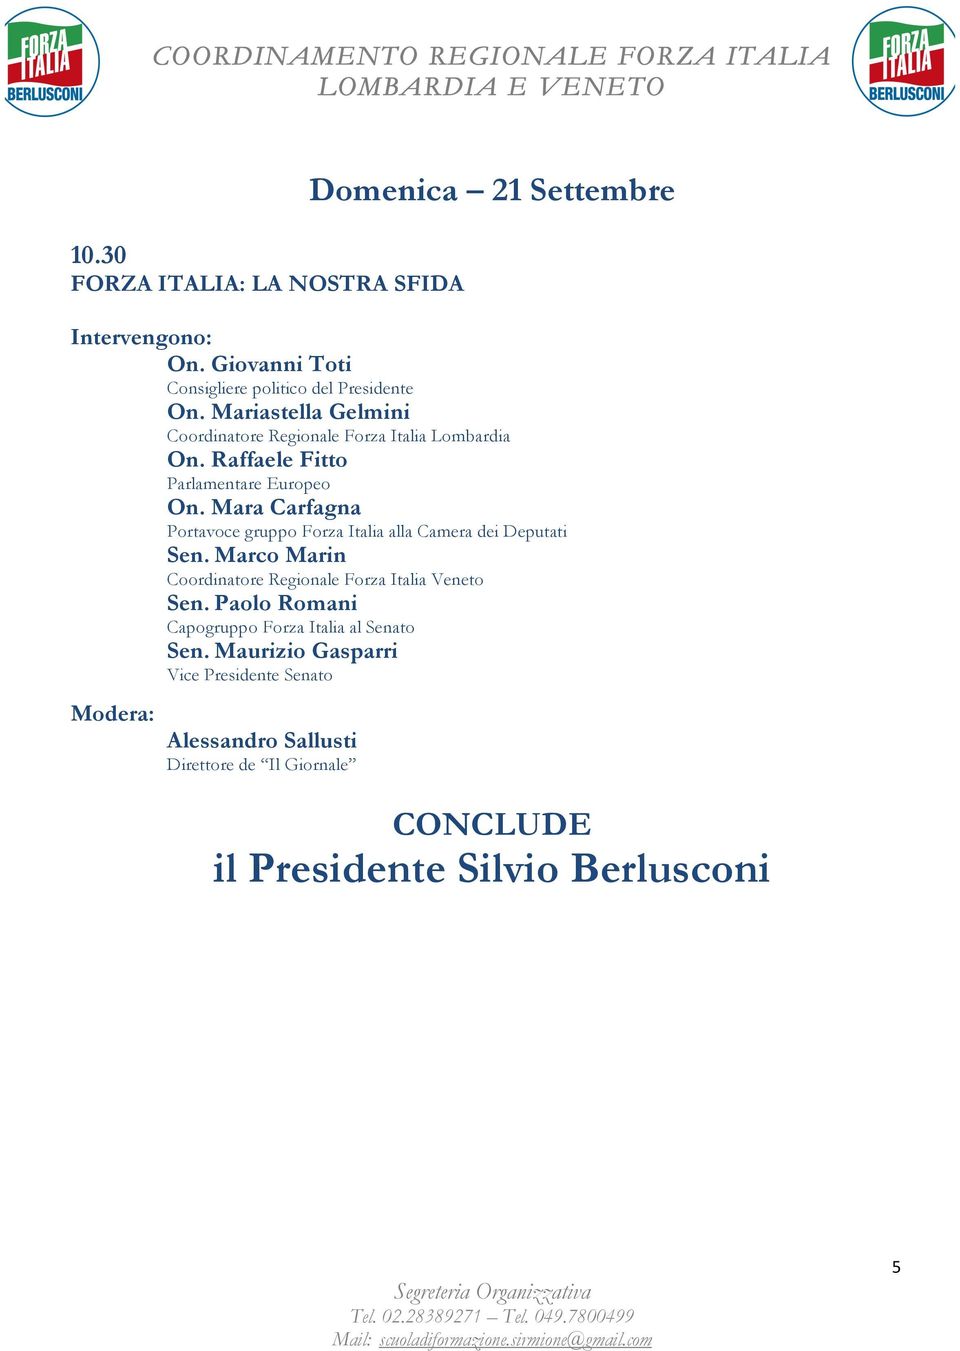 Mara Carfagna Portavoce gruppo Forza Italia alla Camera dei Deputati Sen. Marco Marin Coordinatore Regionale Forza Italia Veneto Sen.